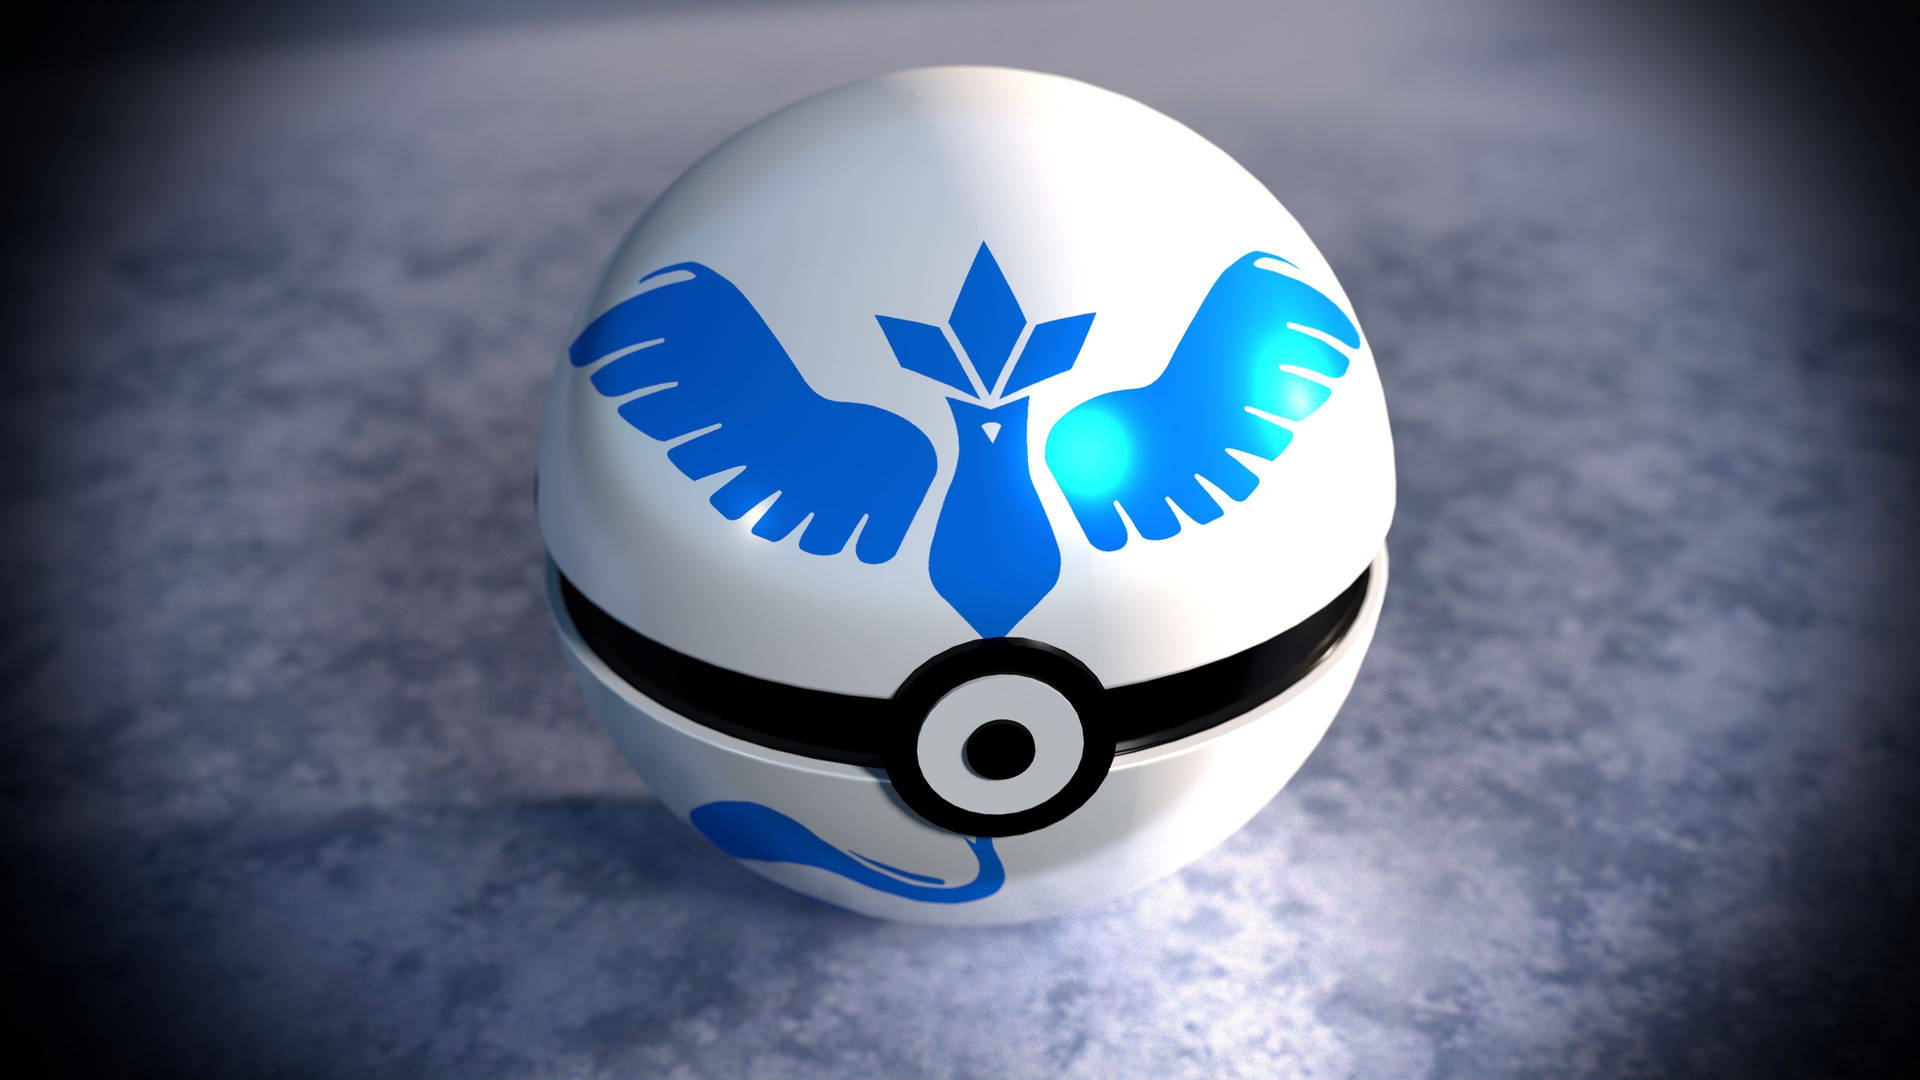 Cool Pokemon Dragon Pokeball Picture